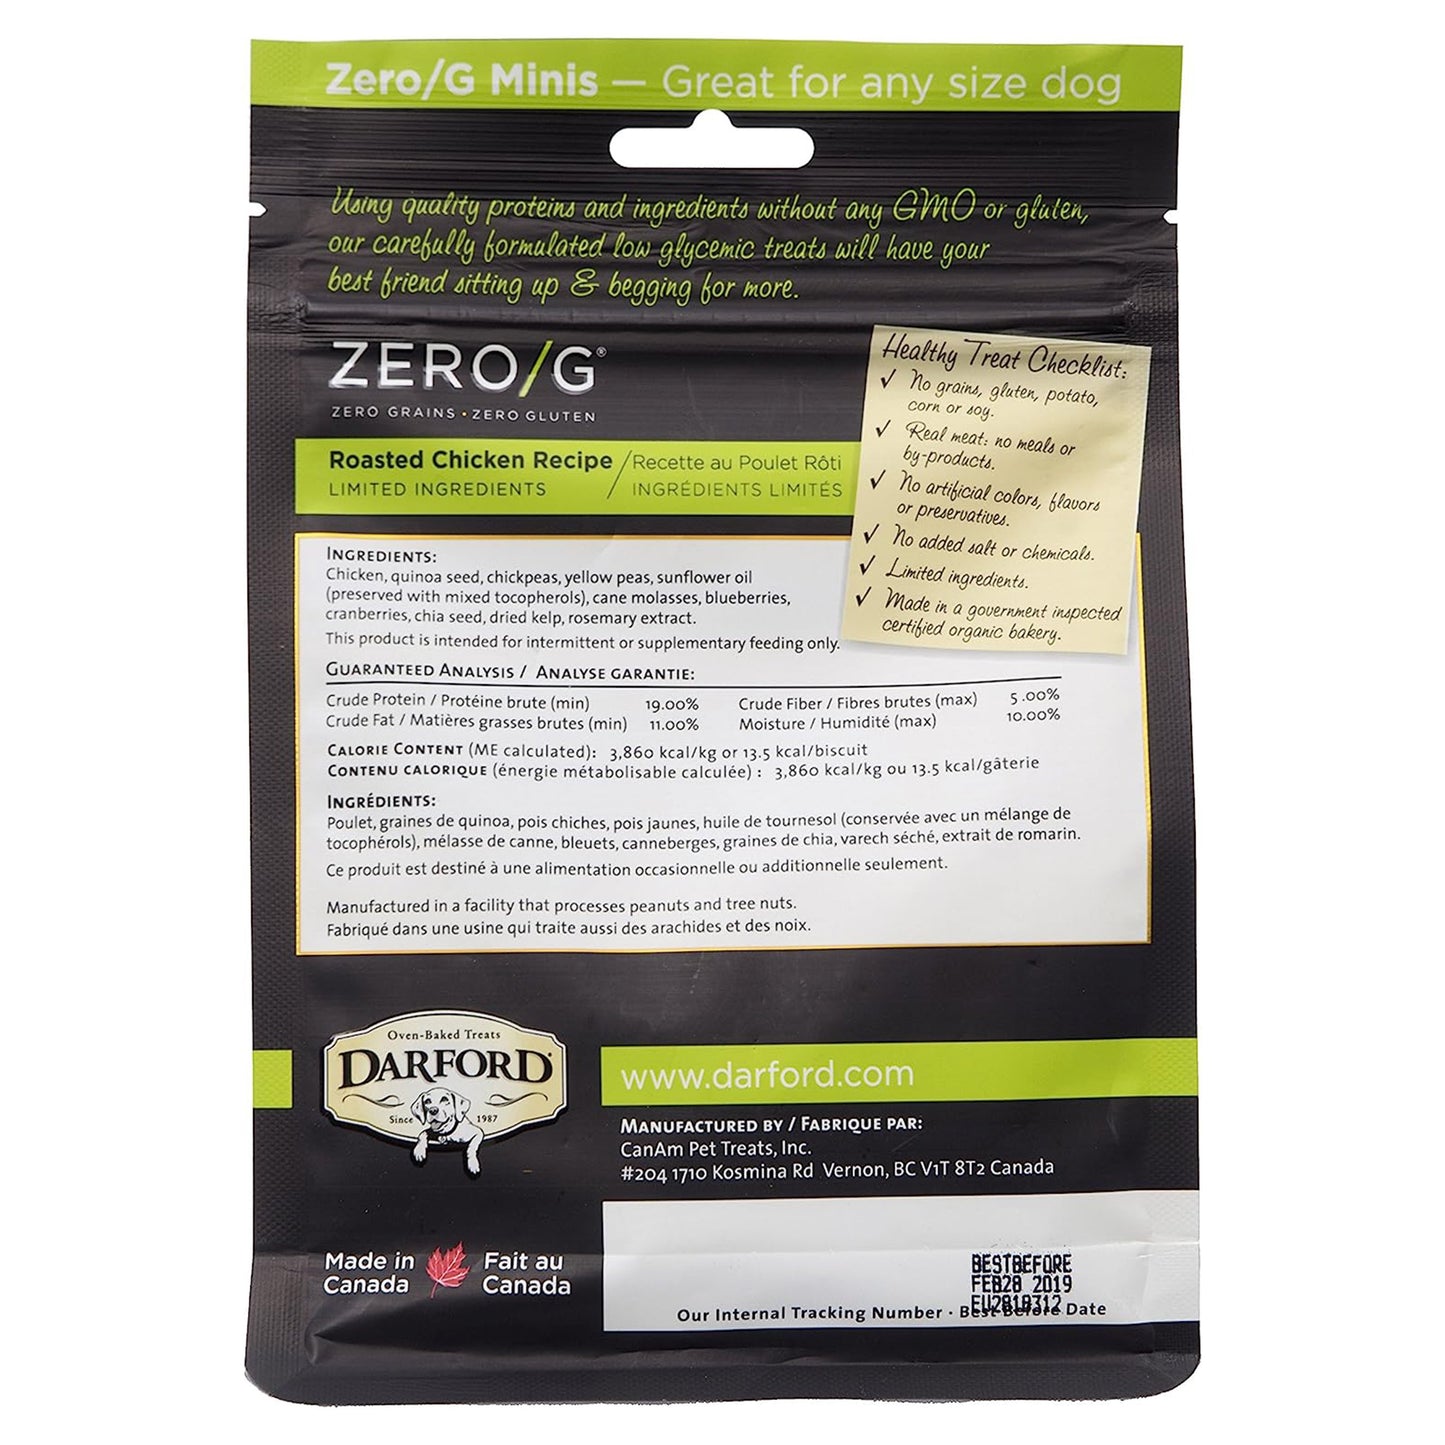 Darford Zero/G MINIS Oven Baked Dog Treats Roasted Chicken Recipe Mini, Roasted Chicken Recipe, 6 oz, Darford